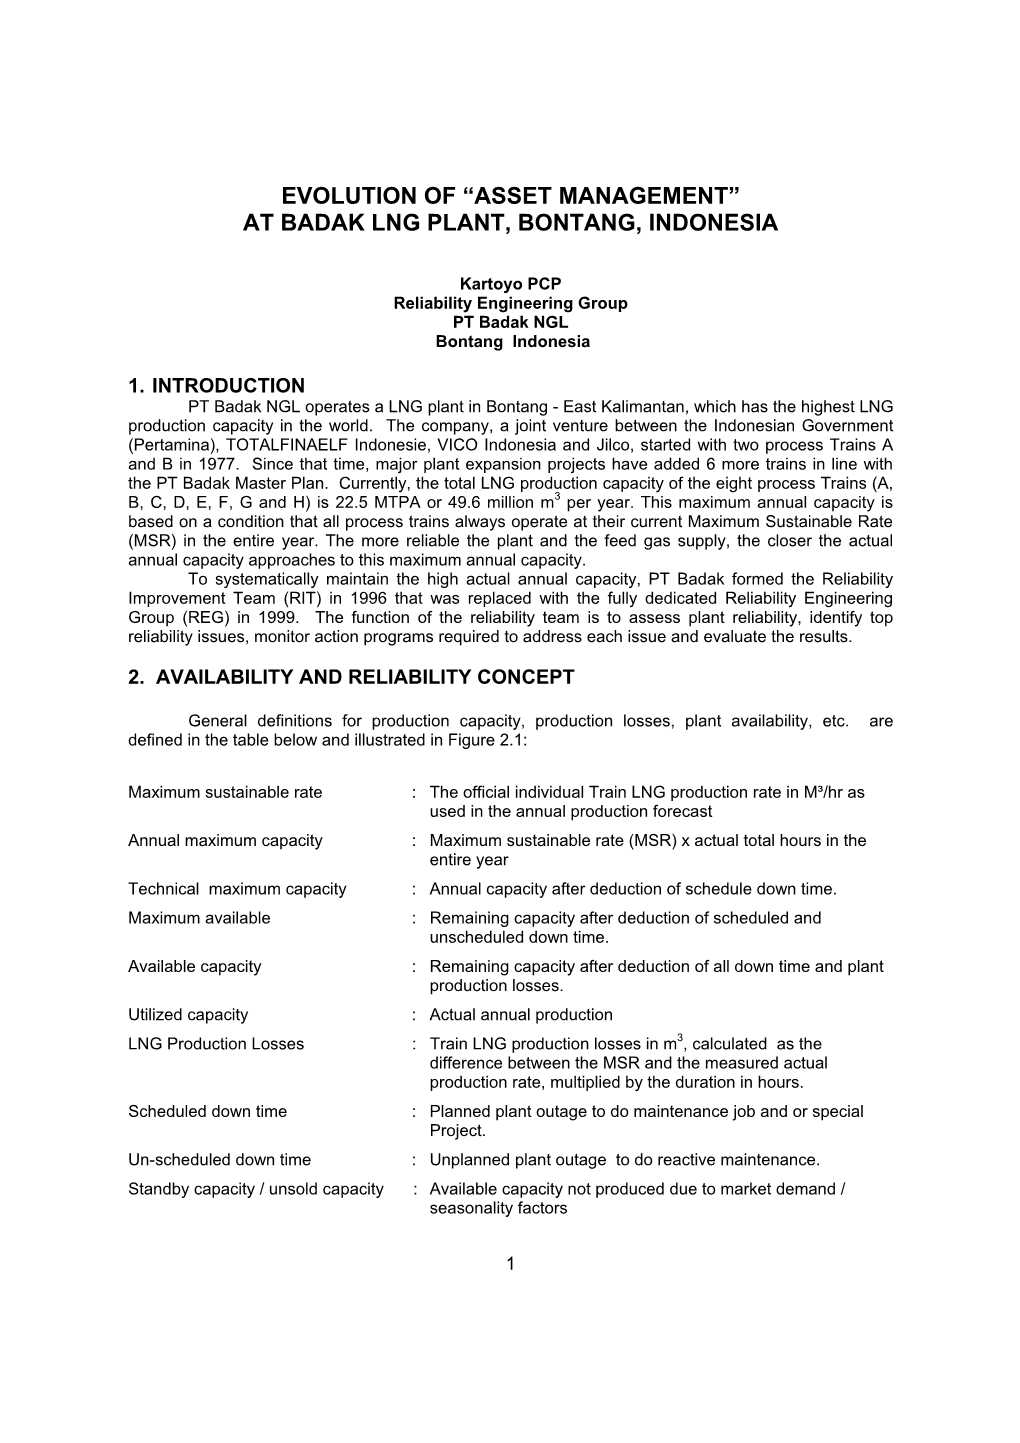 Evolution of Asset Management at Badak LNG Plant